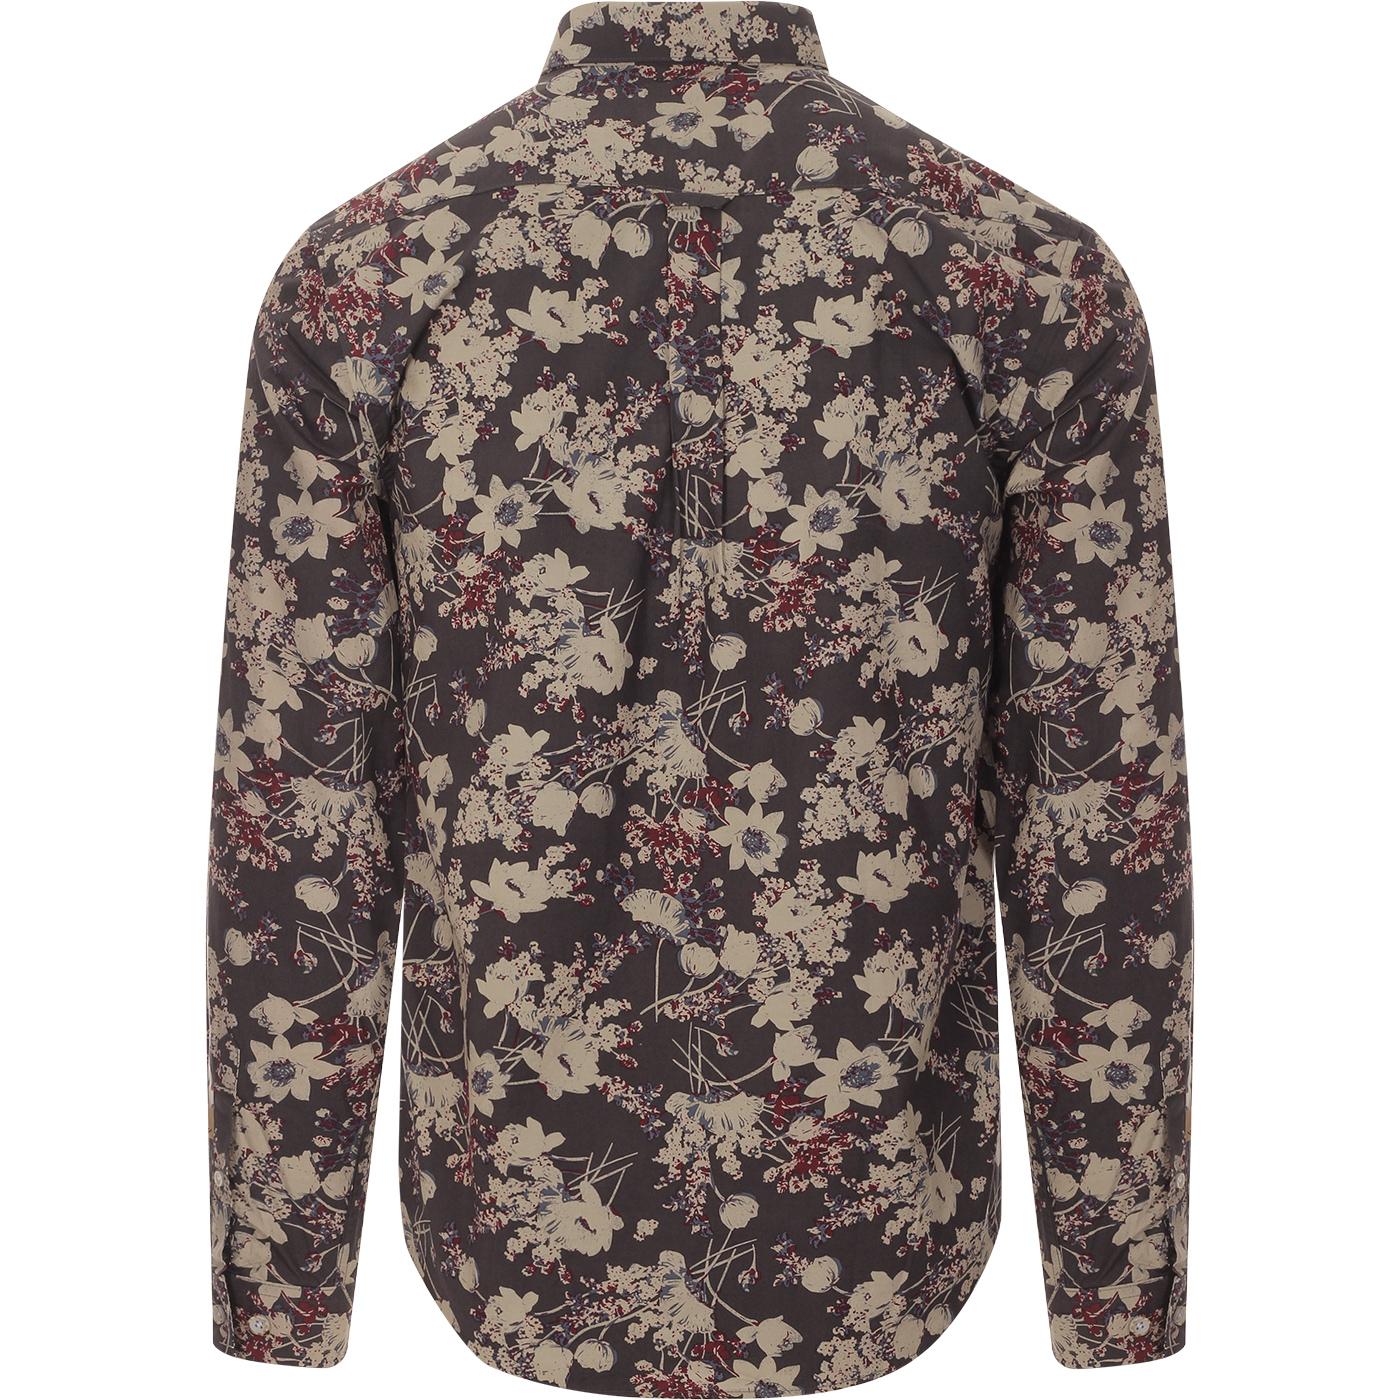 GABICCI VINTAGE Keitel Men's 60s Mod Floral Shadow Shirt